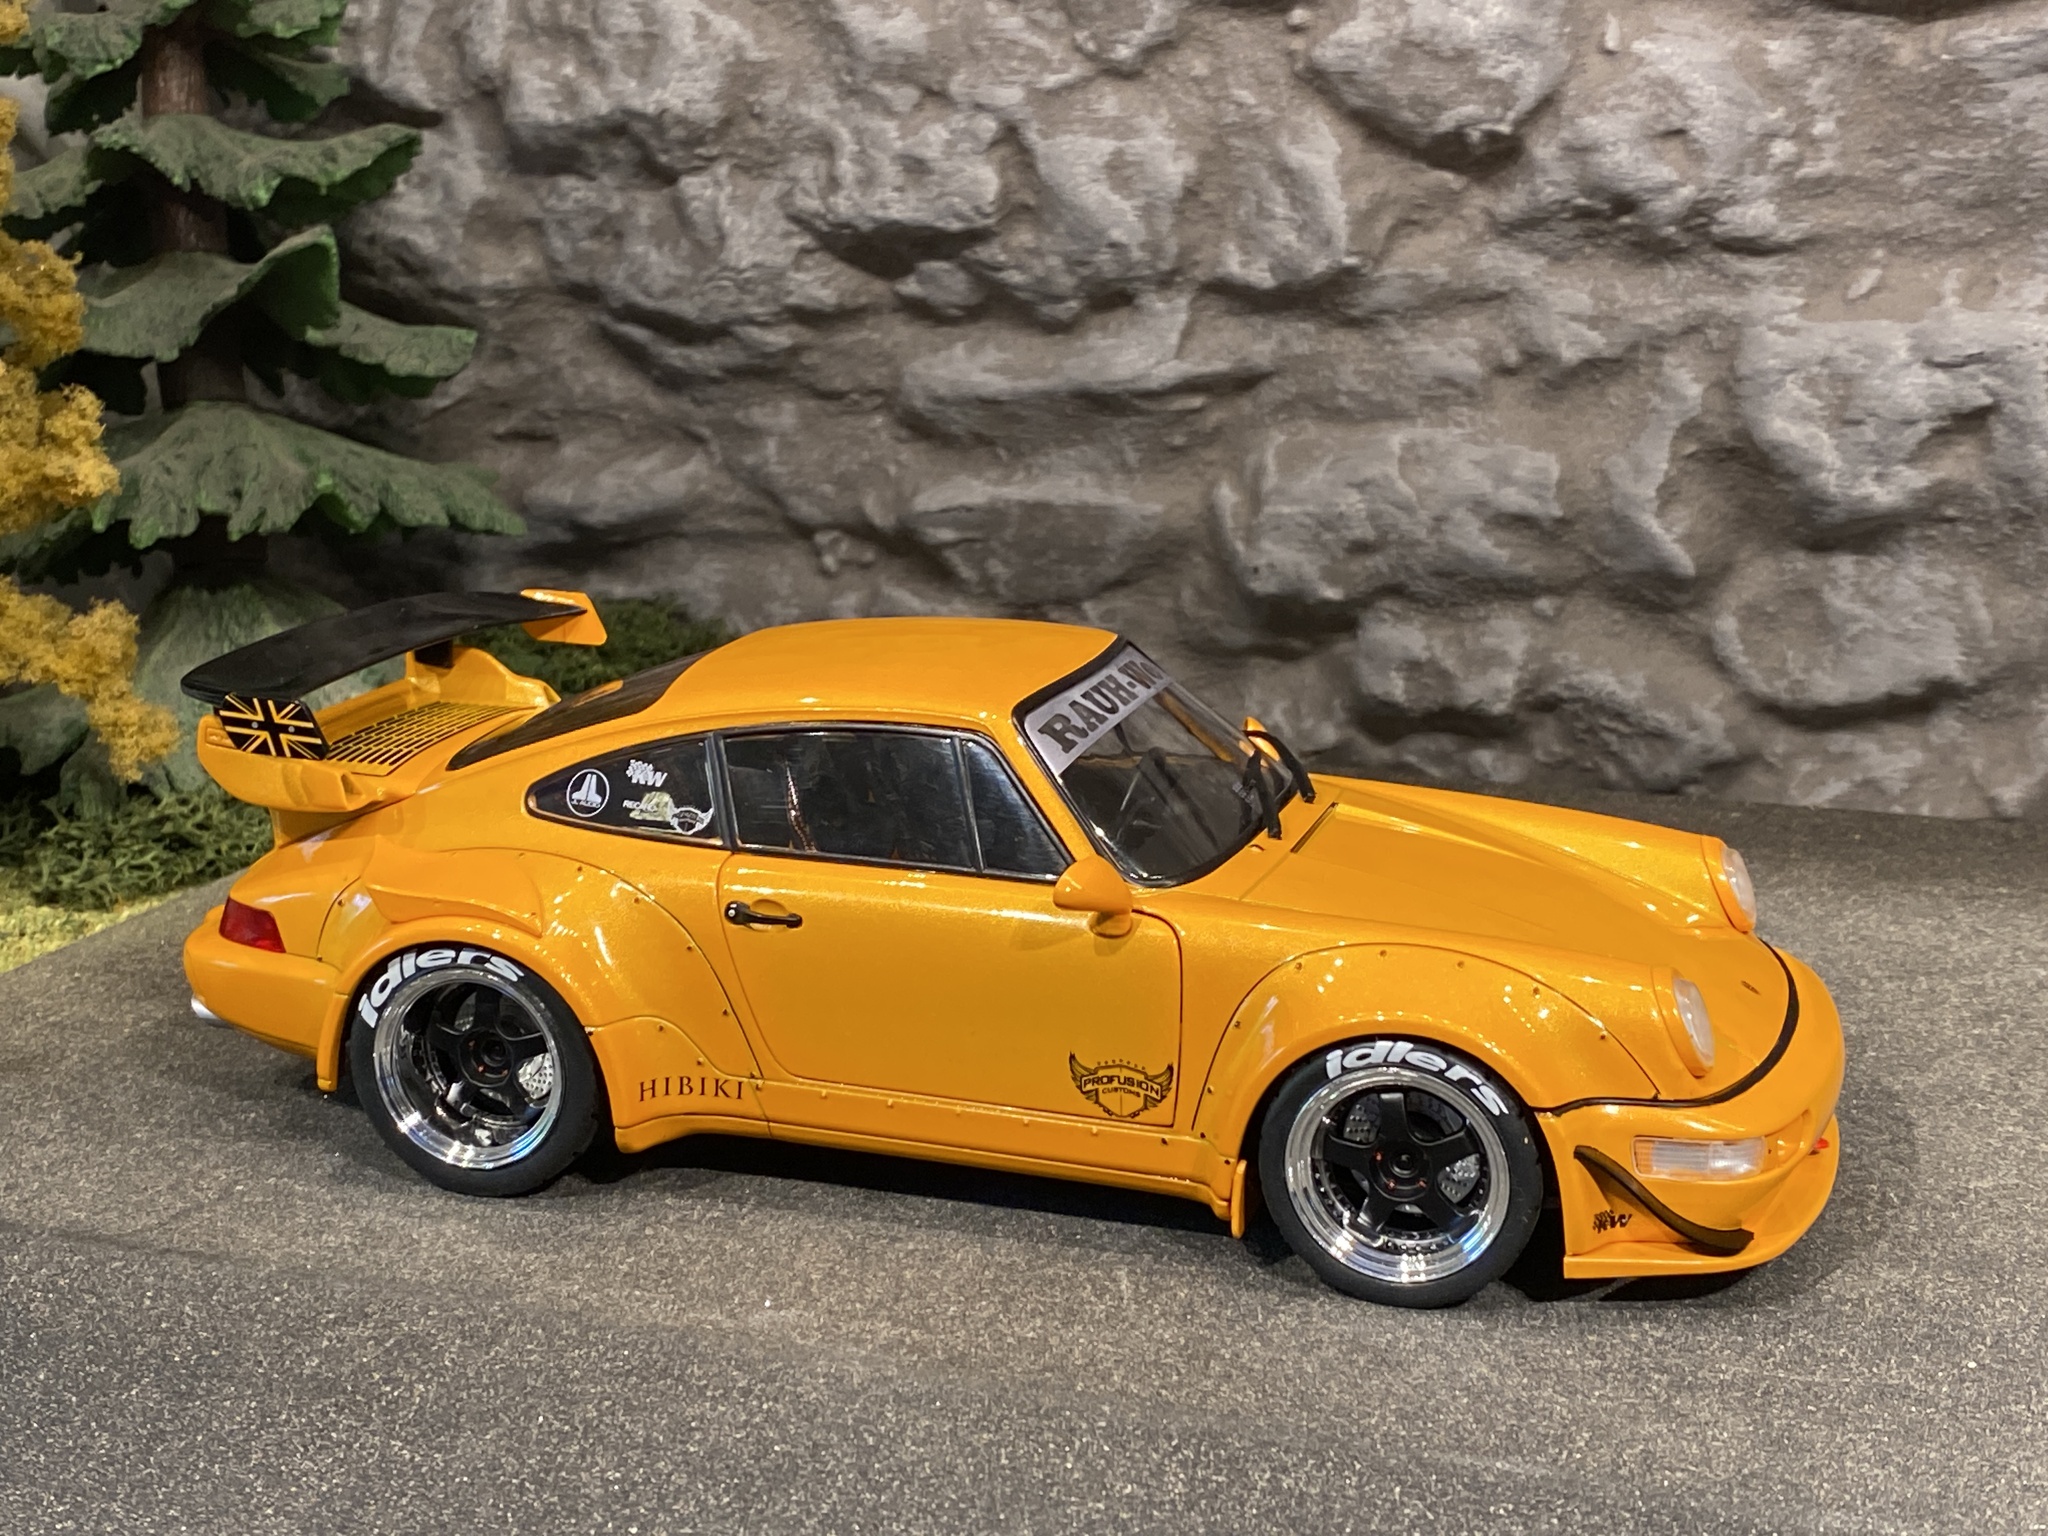 Skala 1/18 Ljuvlig Porsche 911 RWB Hibiki från Solido